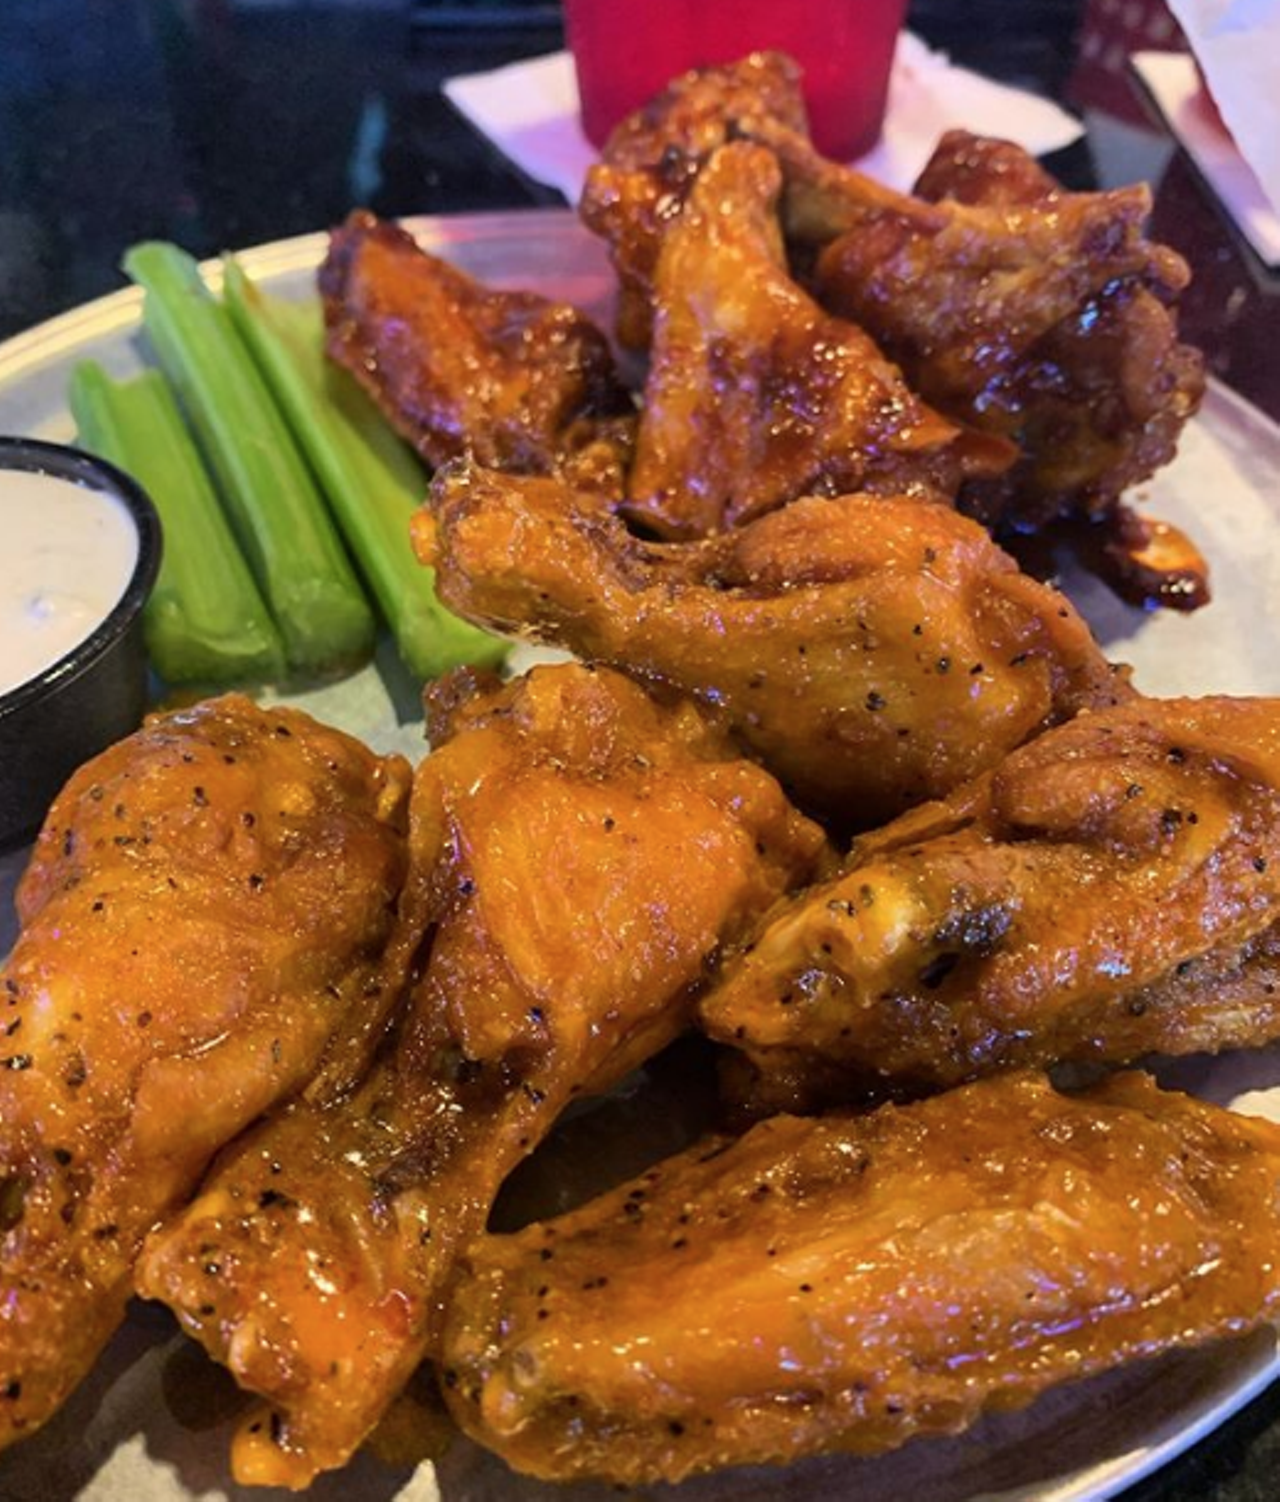 Best Wings
Pluckers Wing Bar, multiple locations, pluckers.com
Photo via Instagram / guacotacogirl